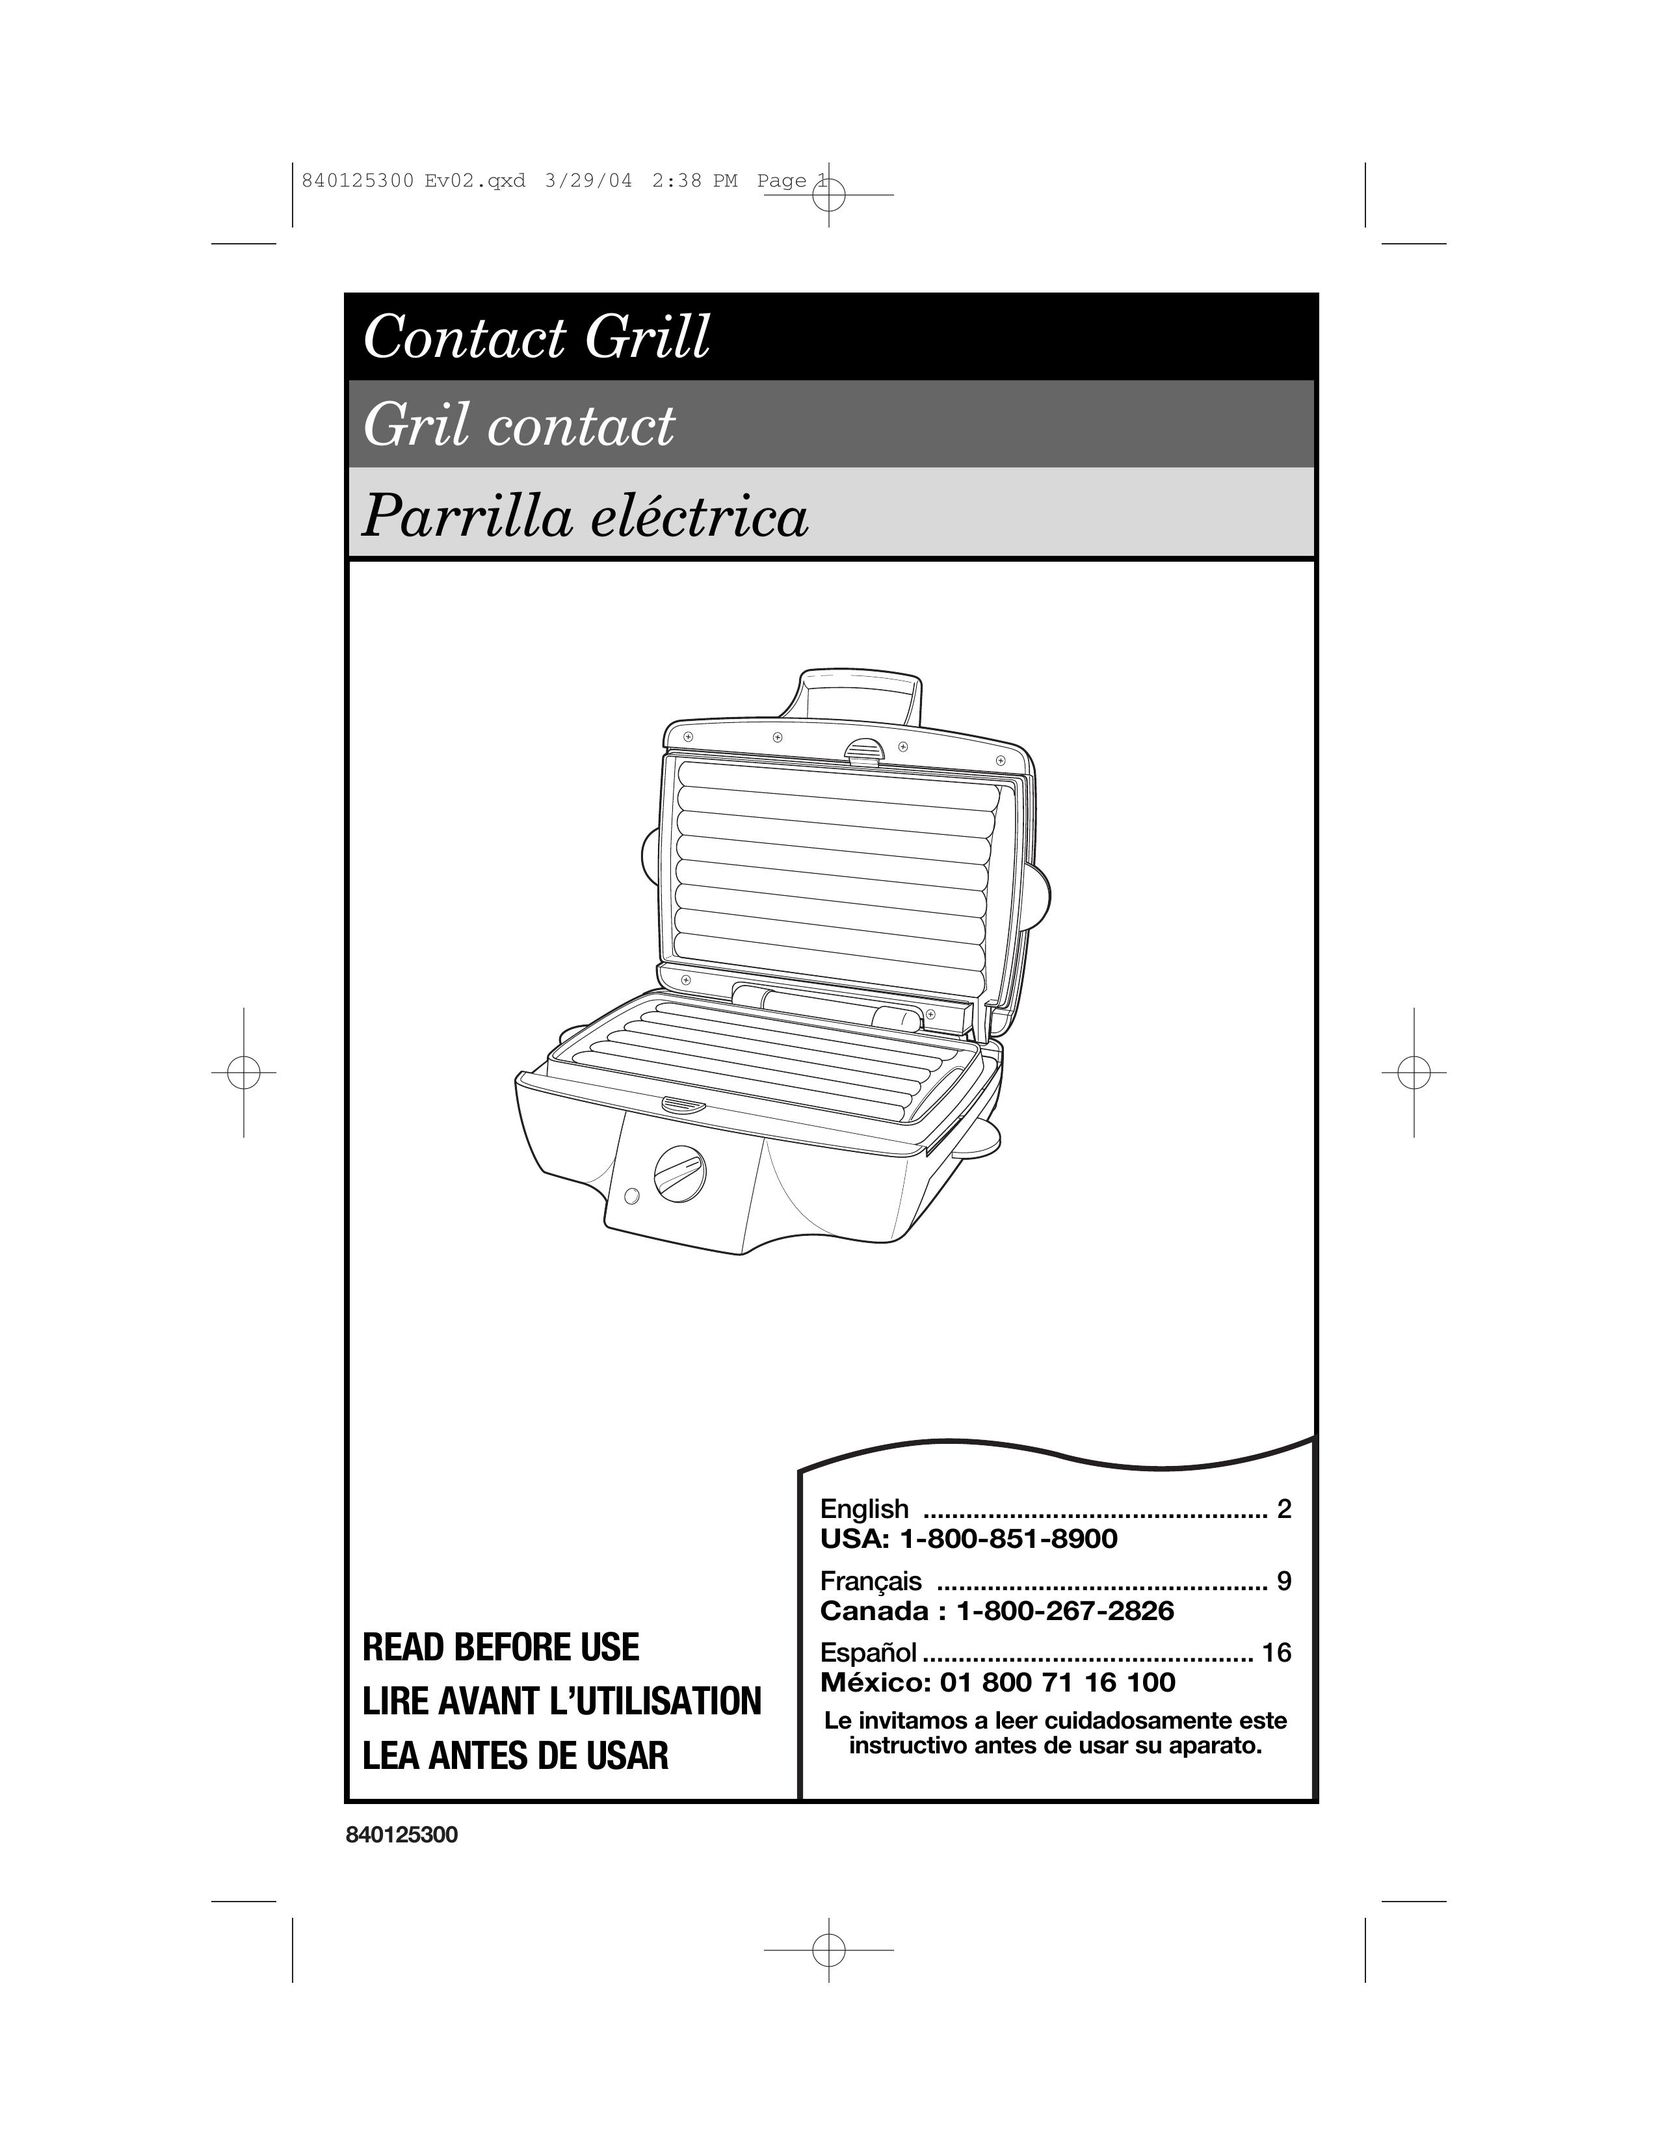 Hamilton Beach 25295 Kitchen Grill User Manual